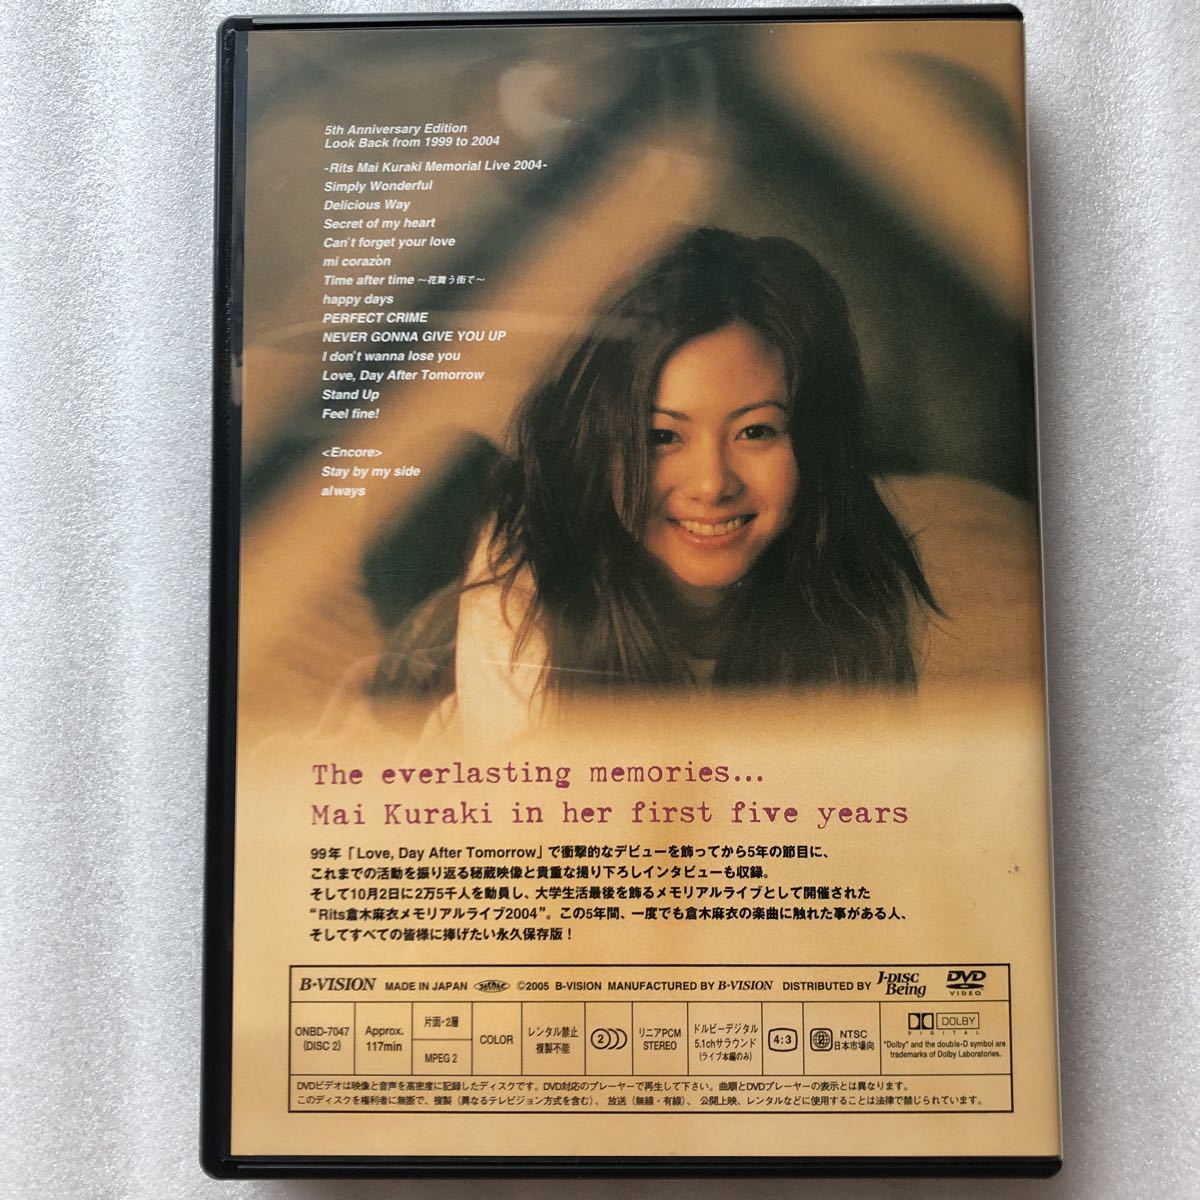 Mai Kuraki 5th Anniversary Edition:GrowStep by Step 中古DVD